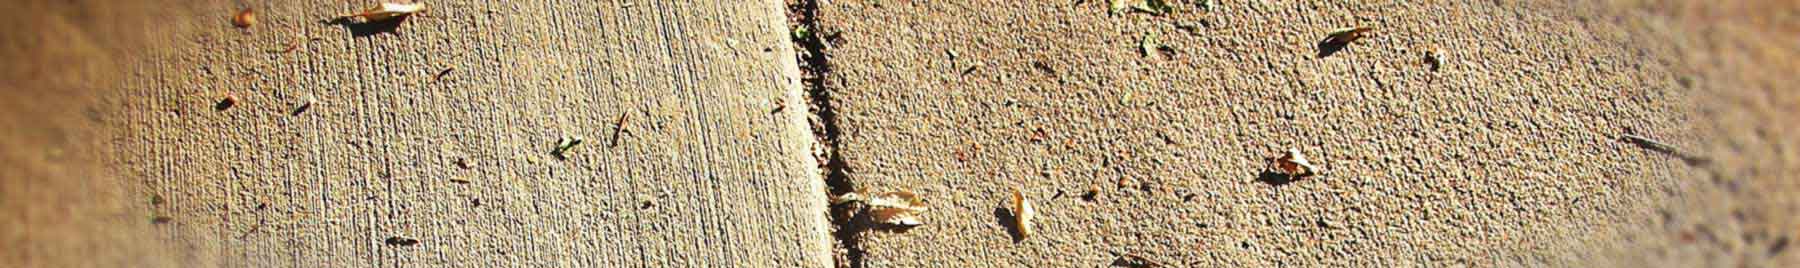 grayish brown sidewalk with dried leaves